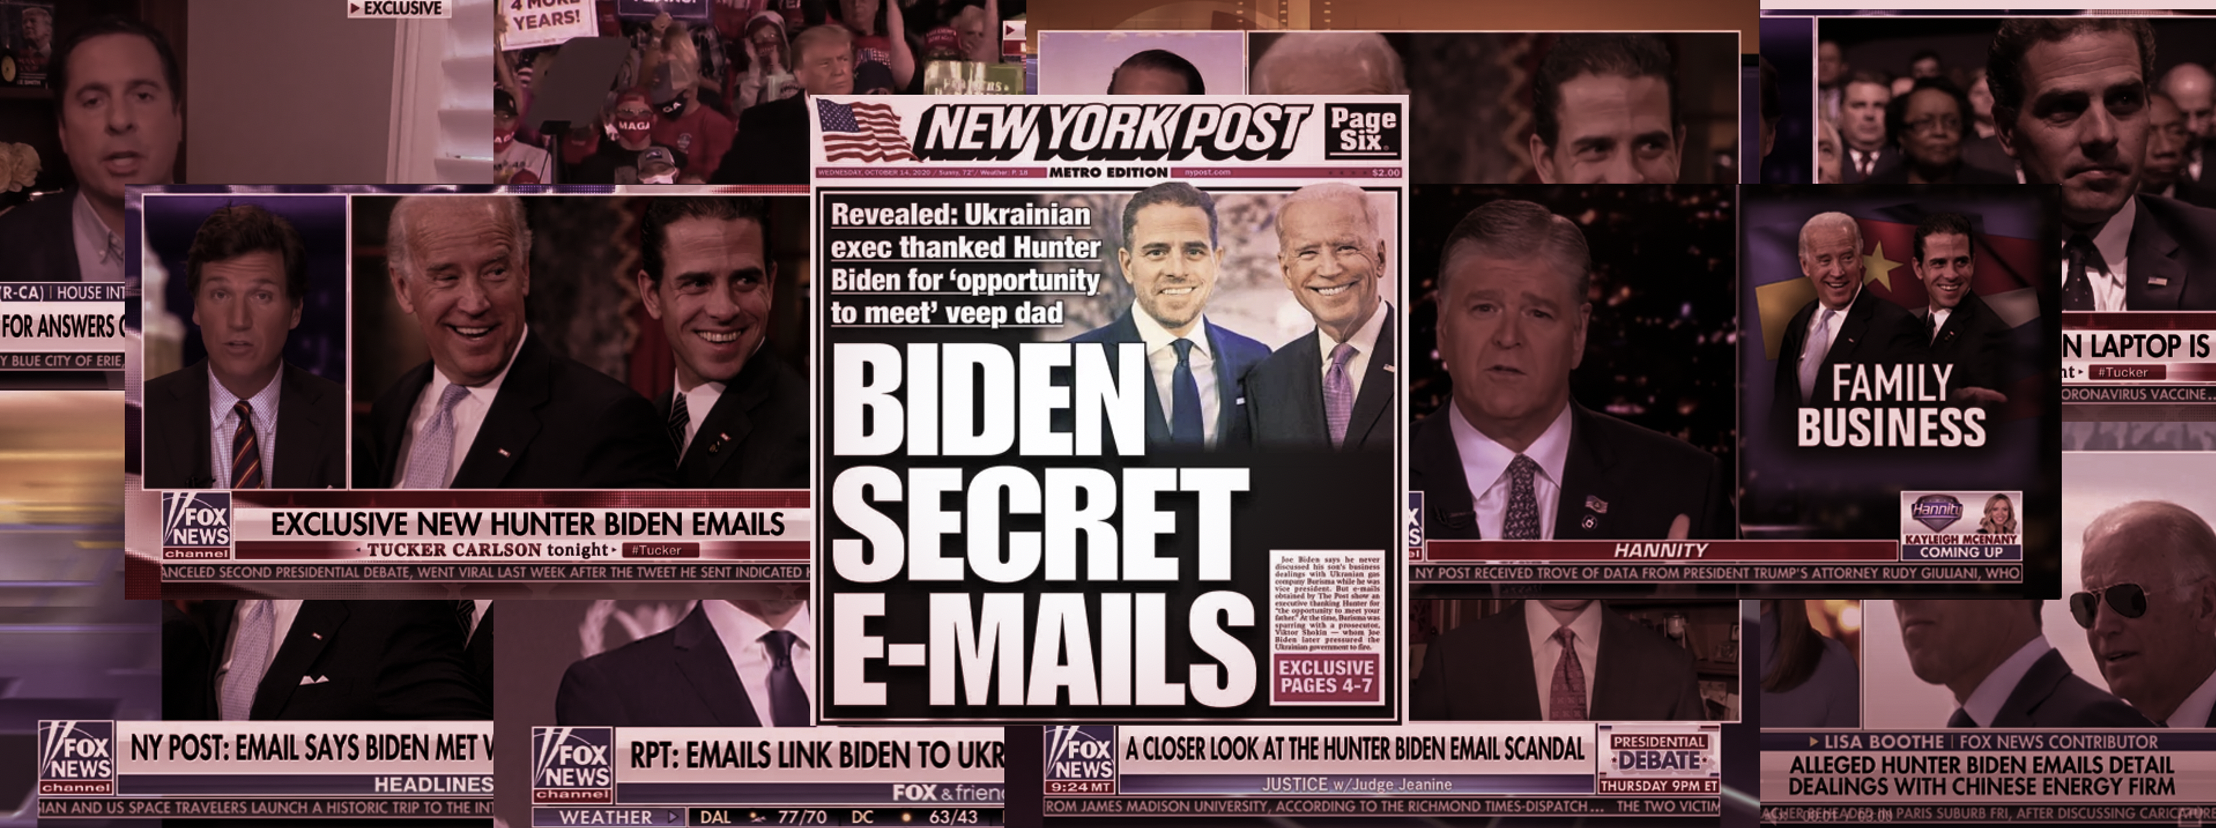 Coverage of Hunter Biden story illustrates extremes in media polarization